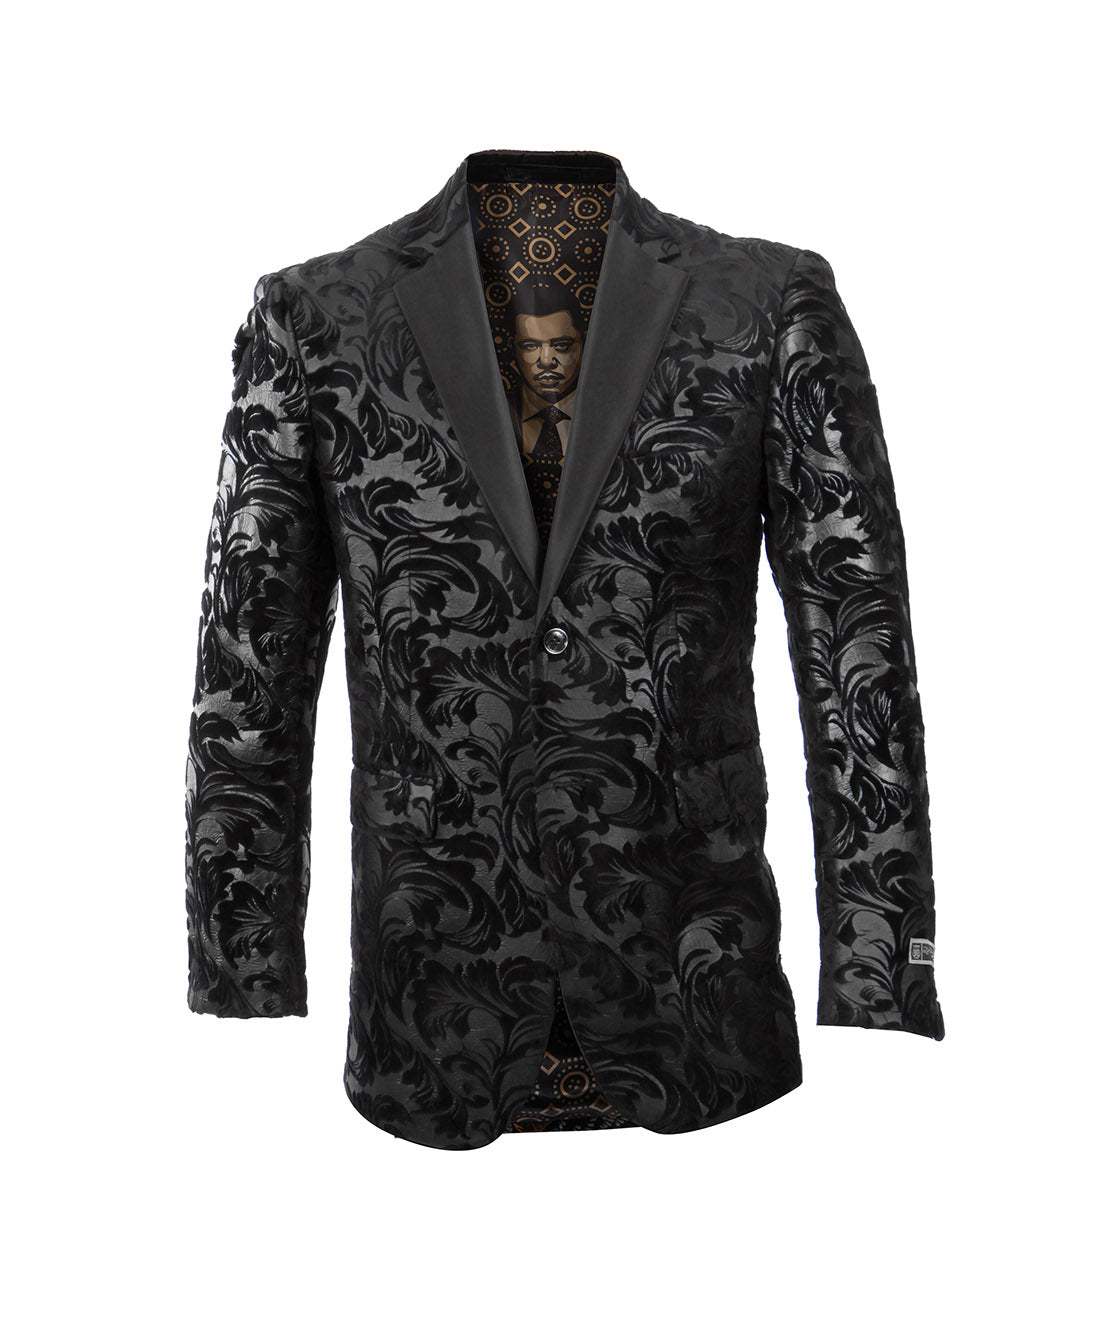 Black Empire Show Blazers Formal Dinner Suit Jackets For Men ME229-01